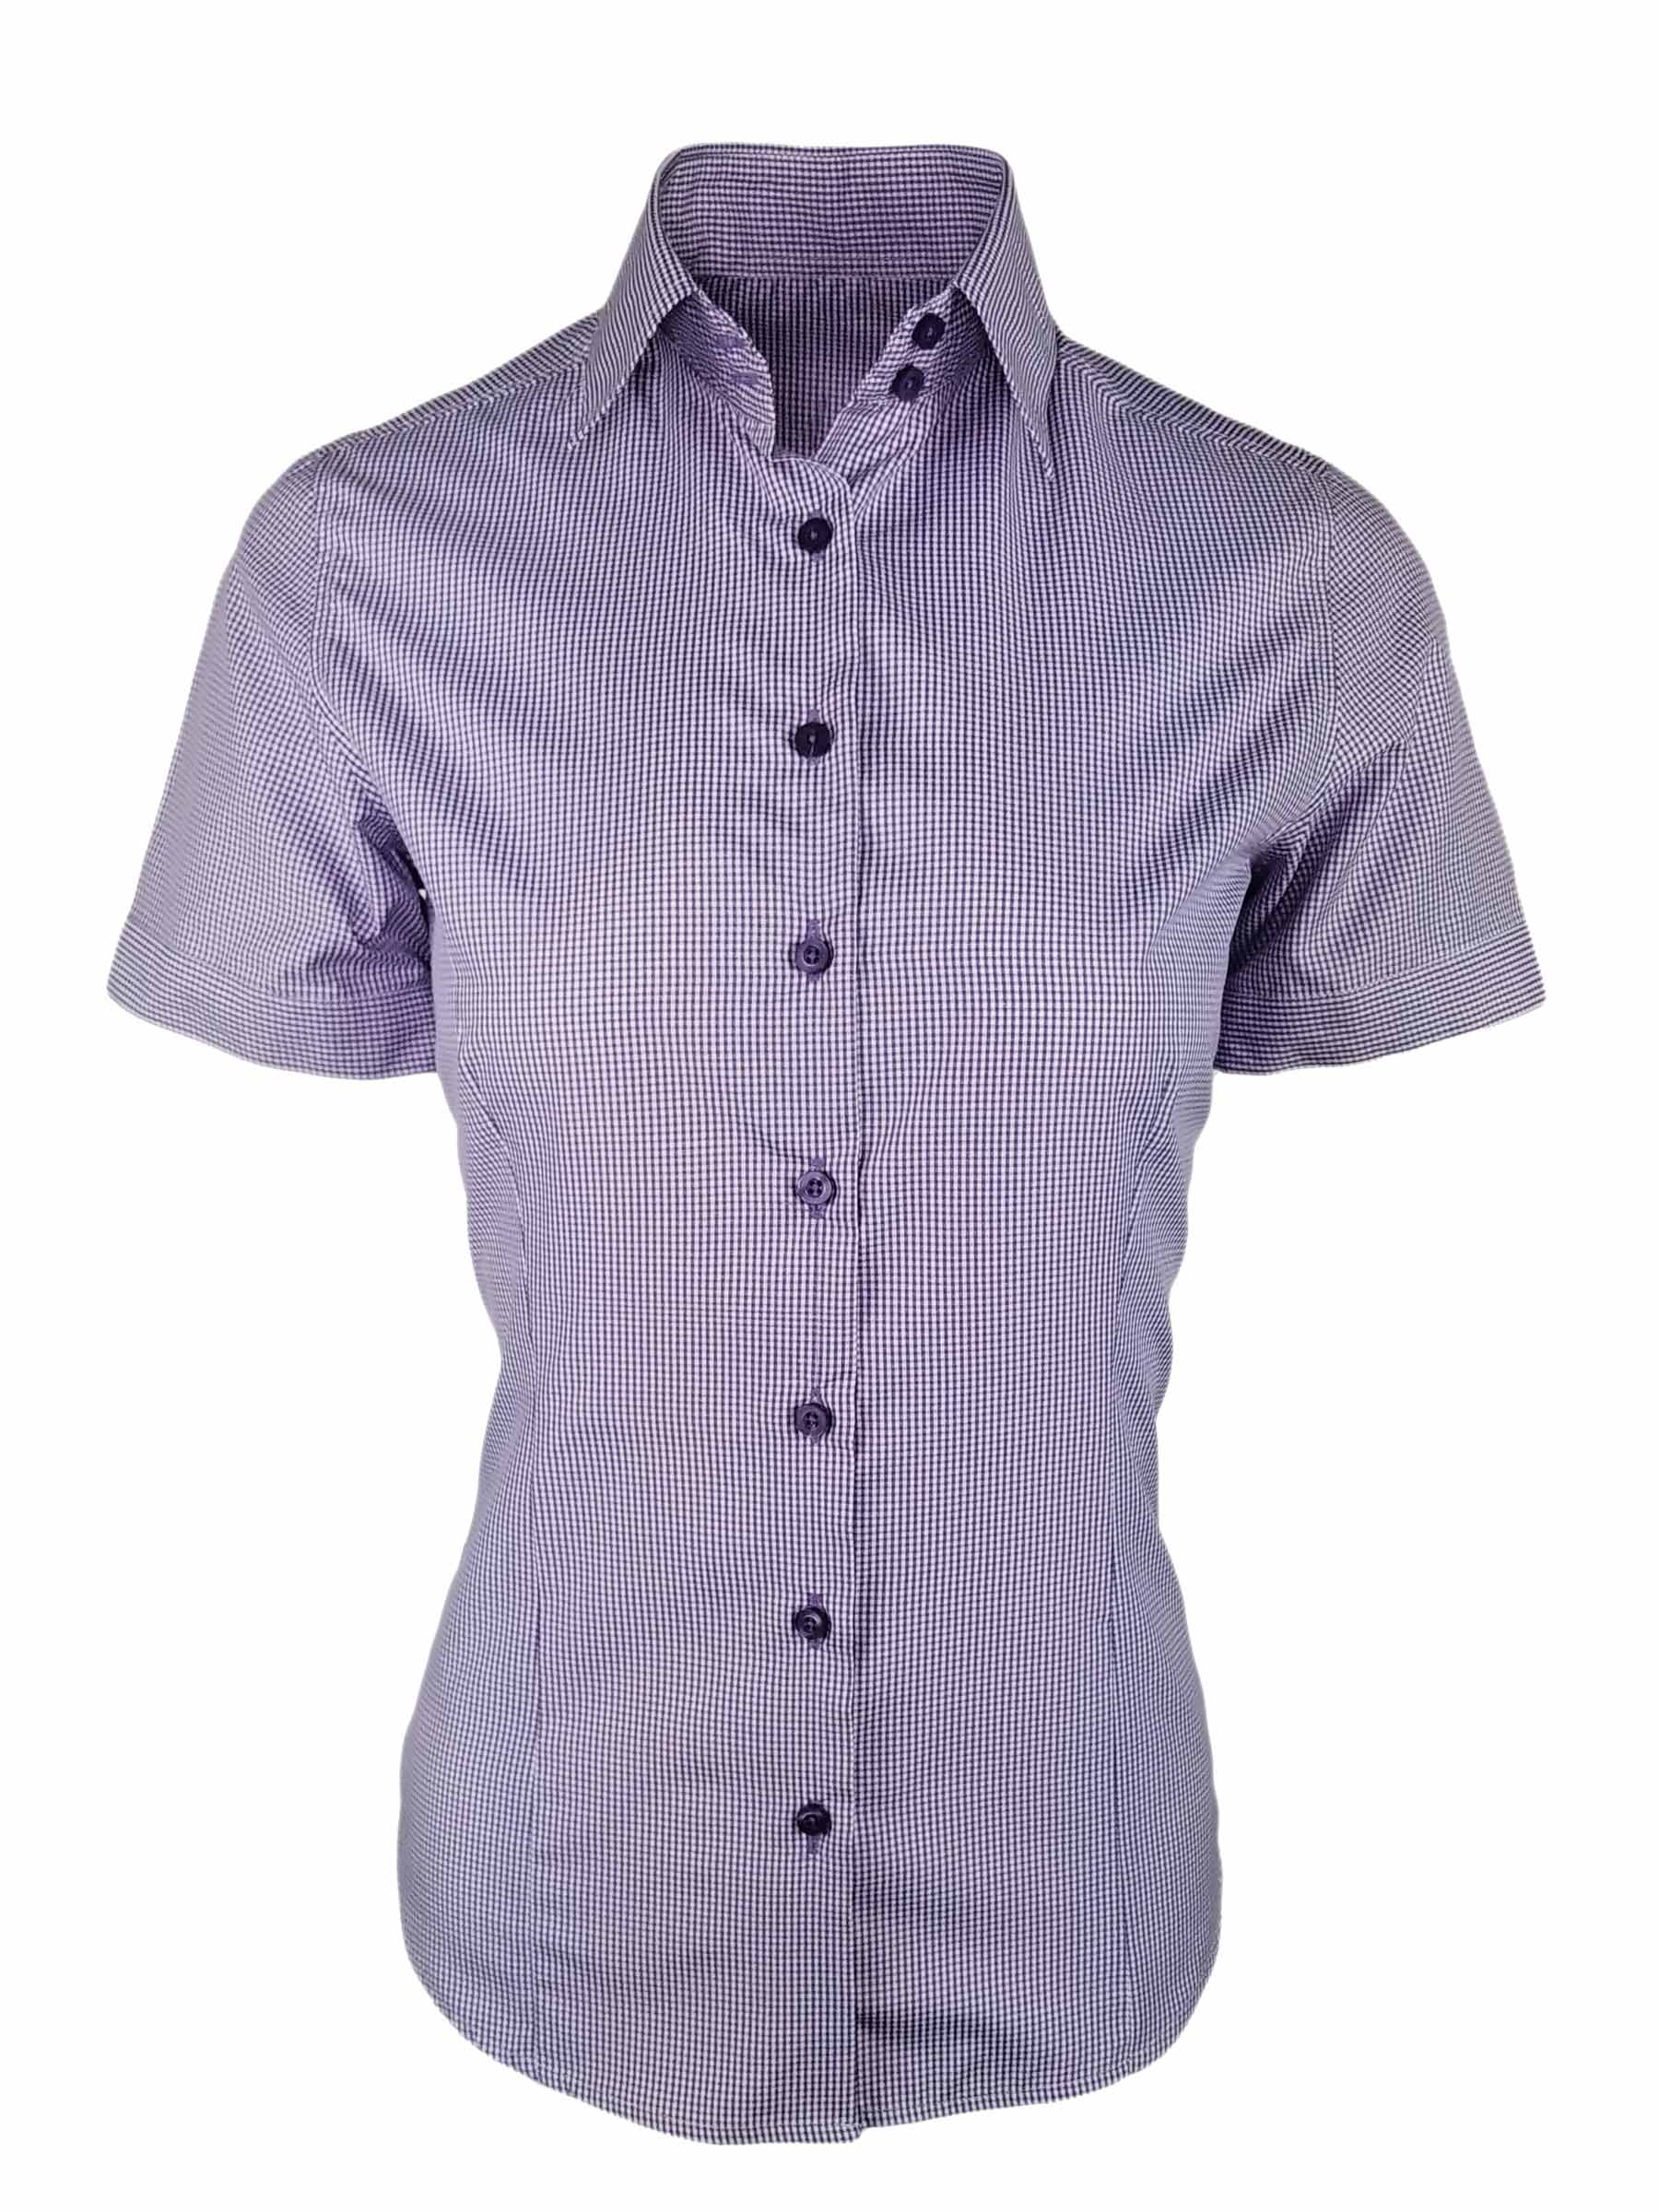 Women's Gingham Shirt - Purple Mini Gingham Check Shirt Short Sleeve ...